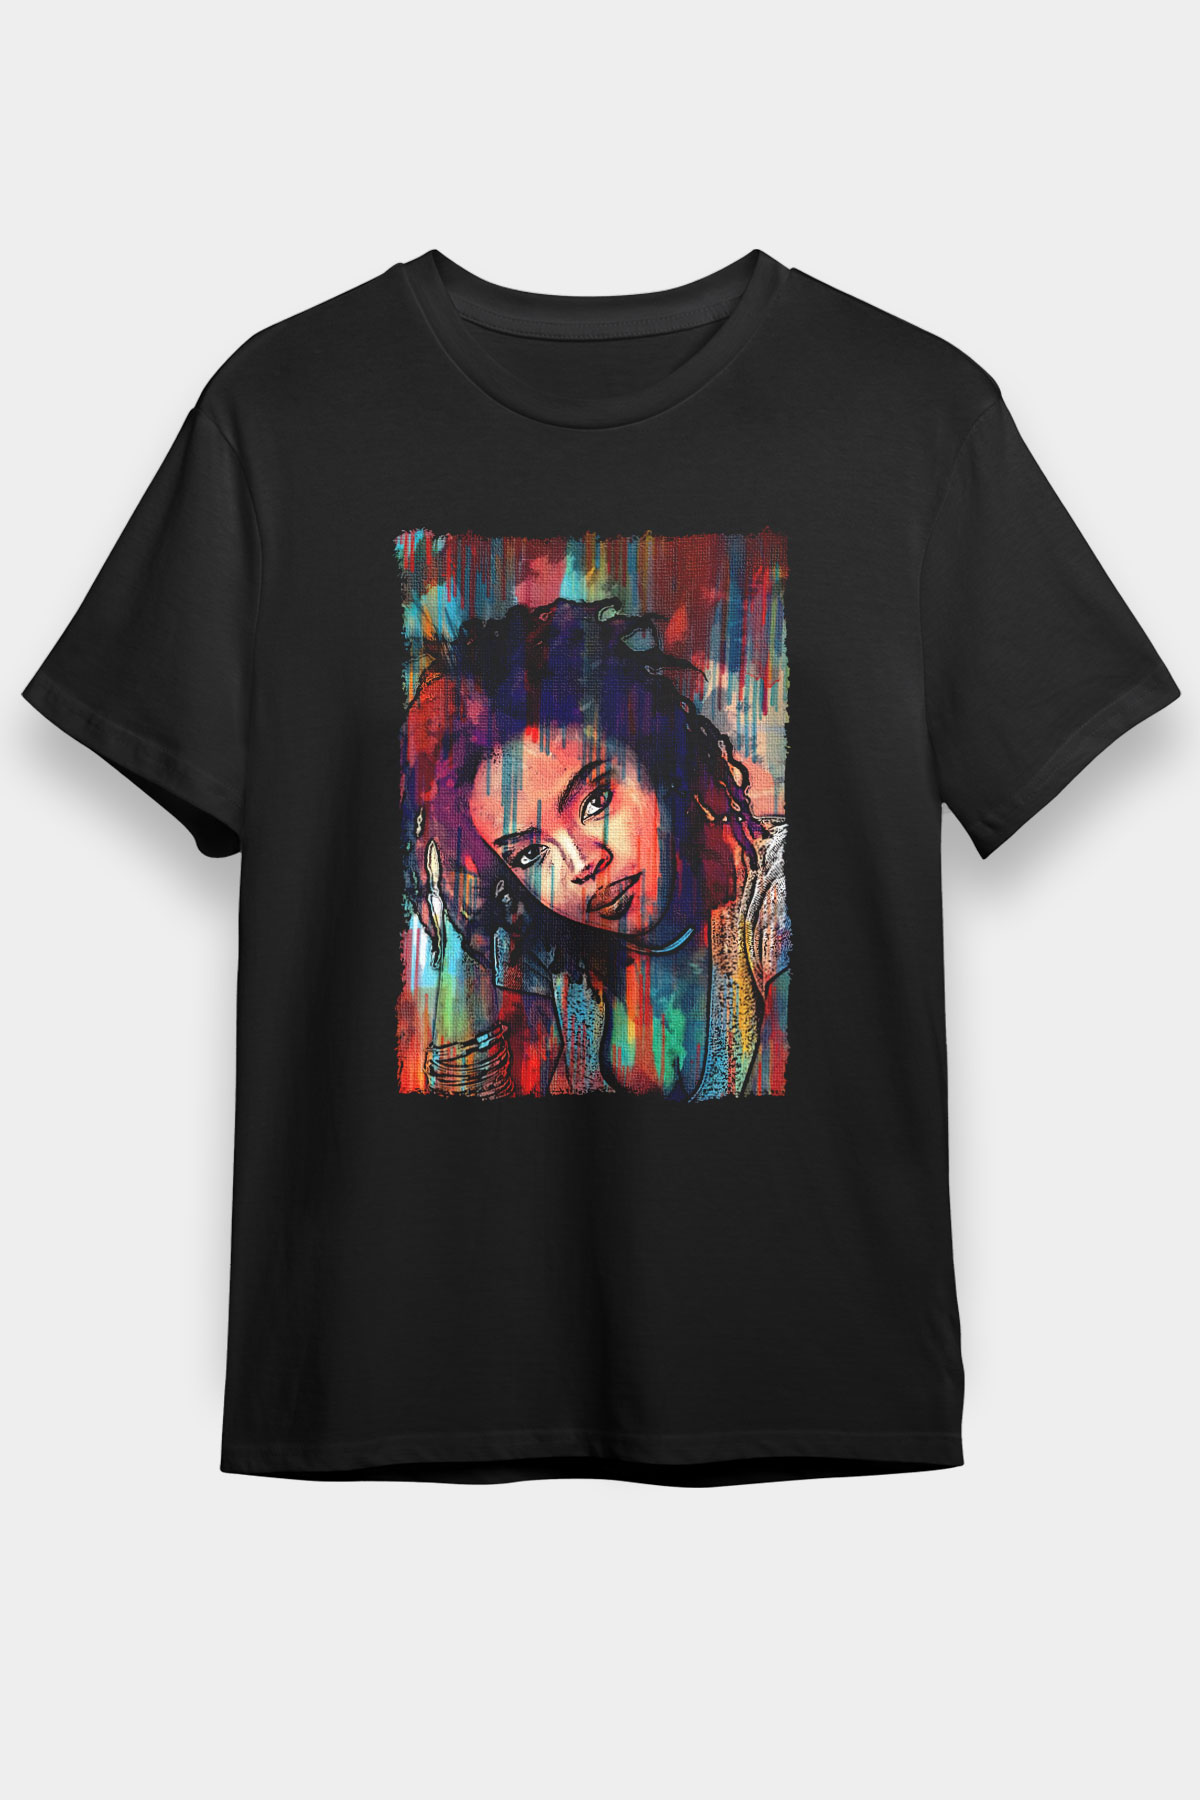 Lauryn Hill T shirt,Hip Hop,Rap Tshirt 07/